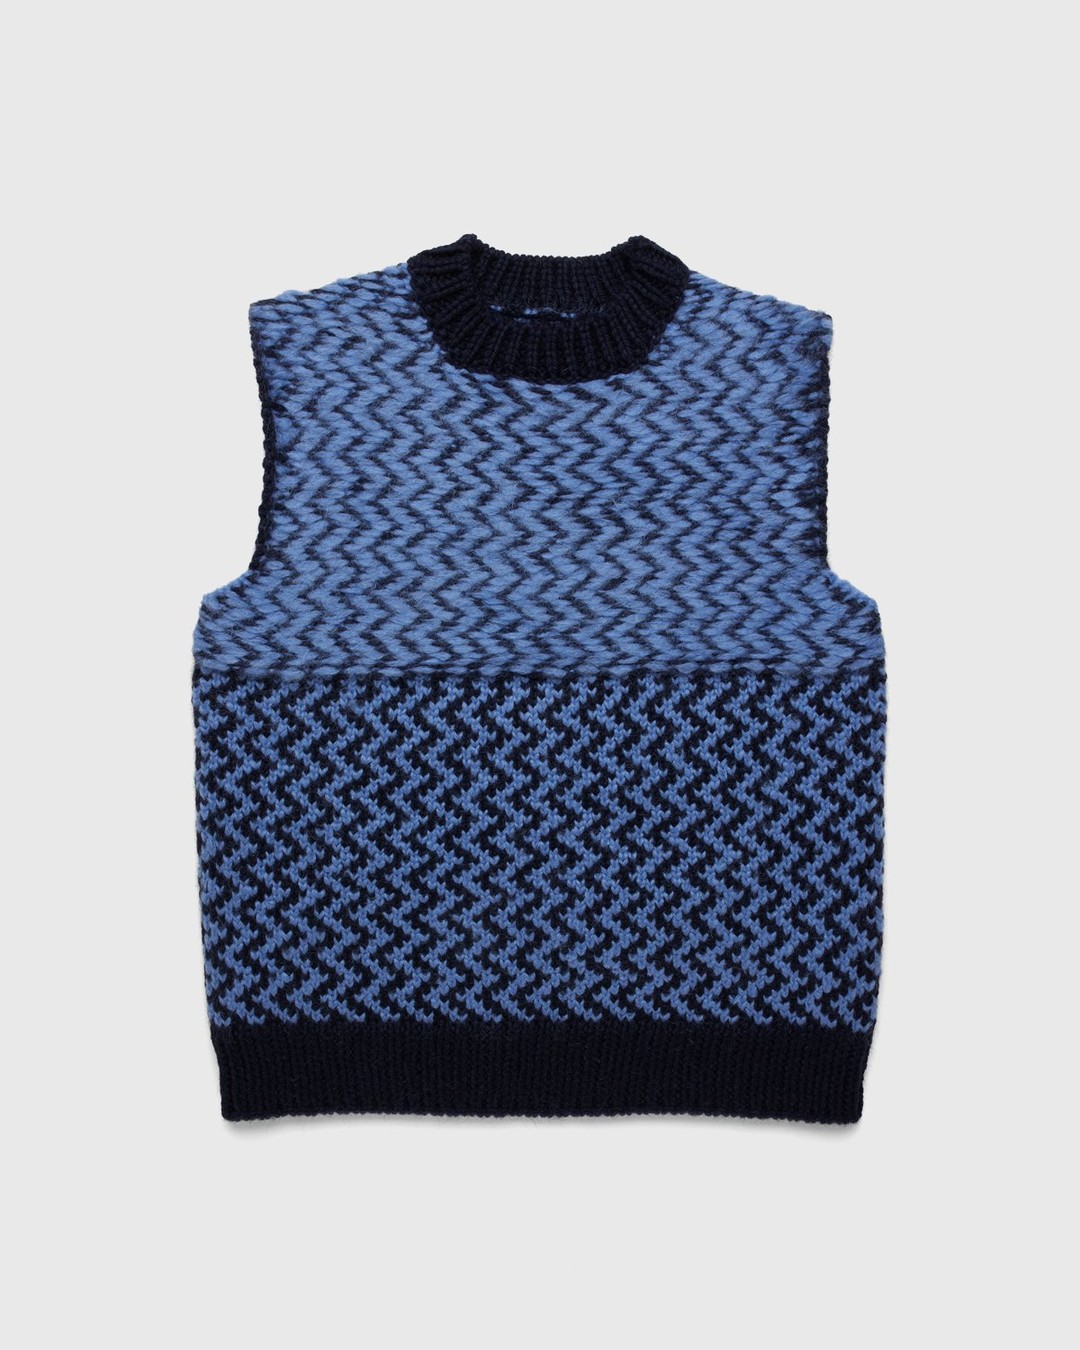 Jil Sander – Vest Knitted Blue - Knitwear - Blue - Image 1